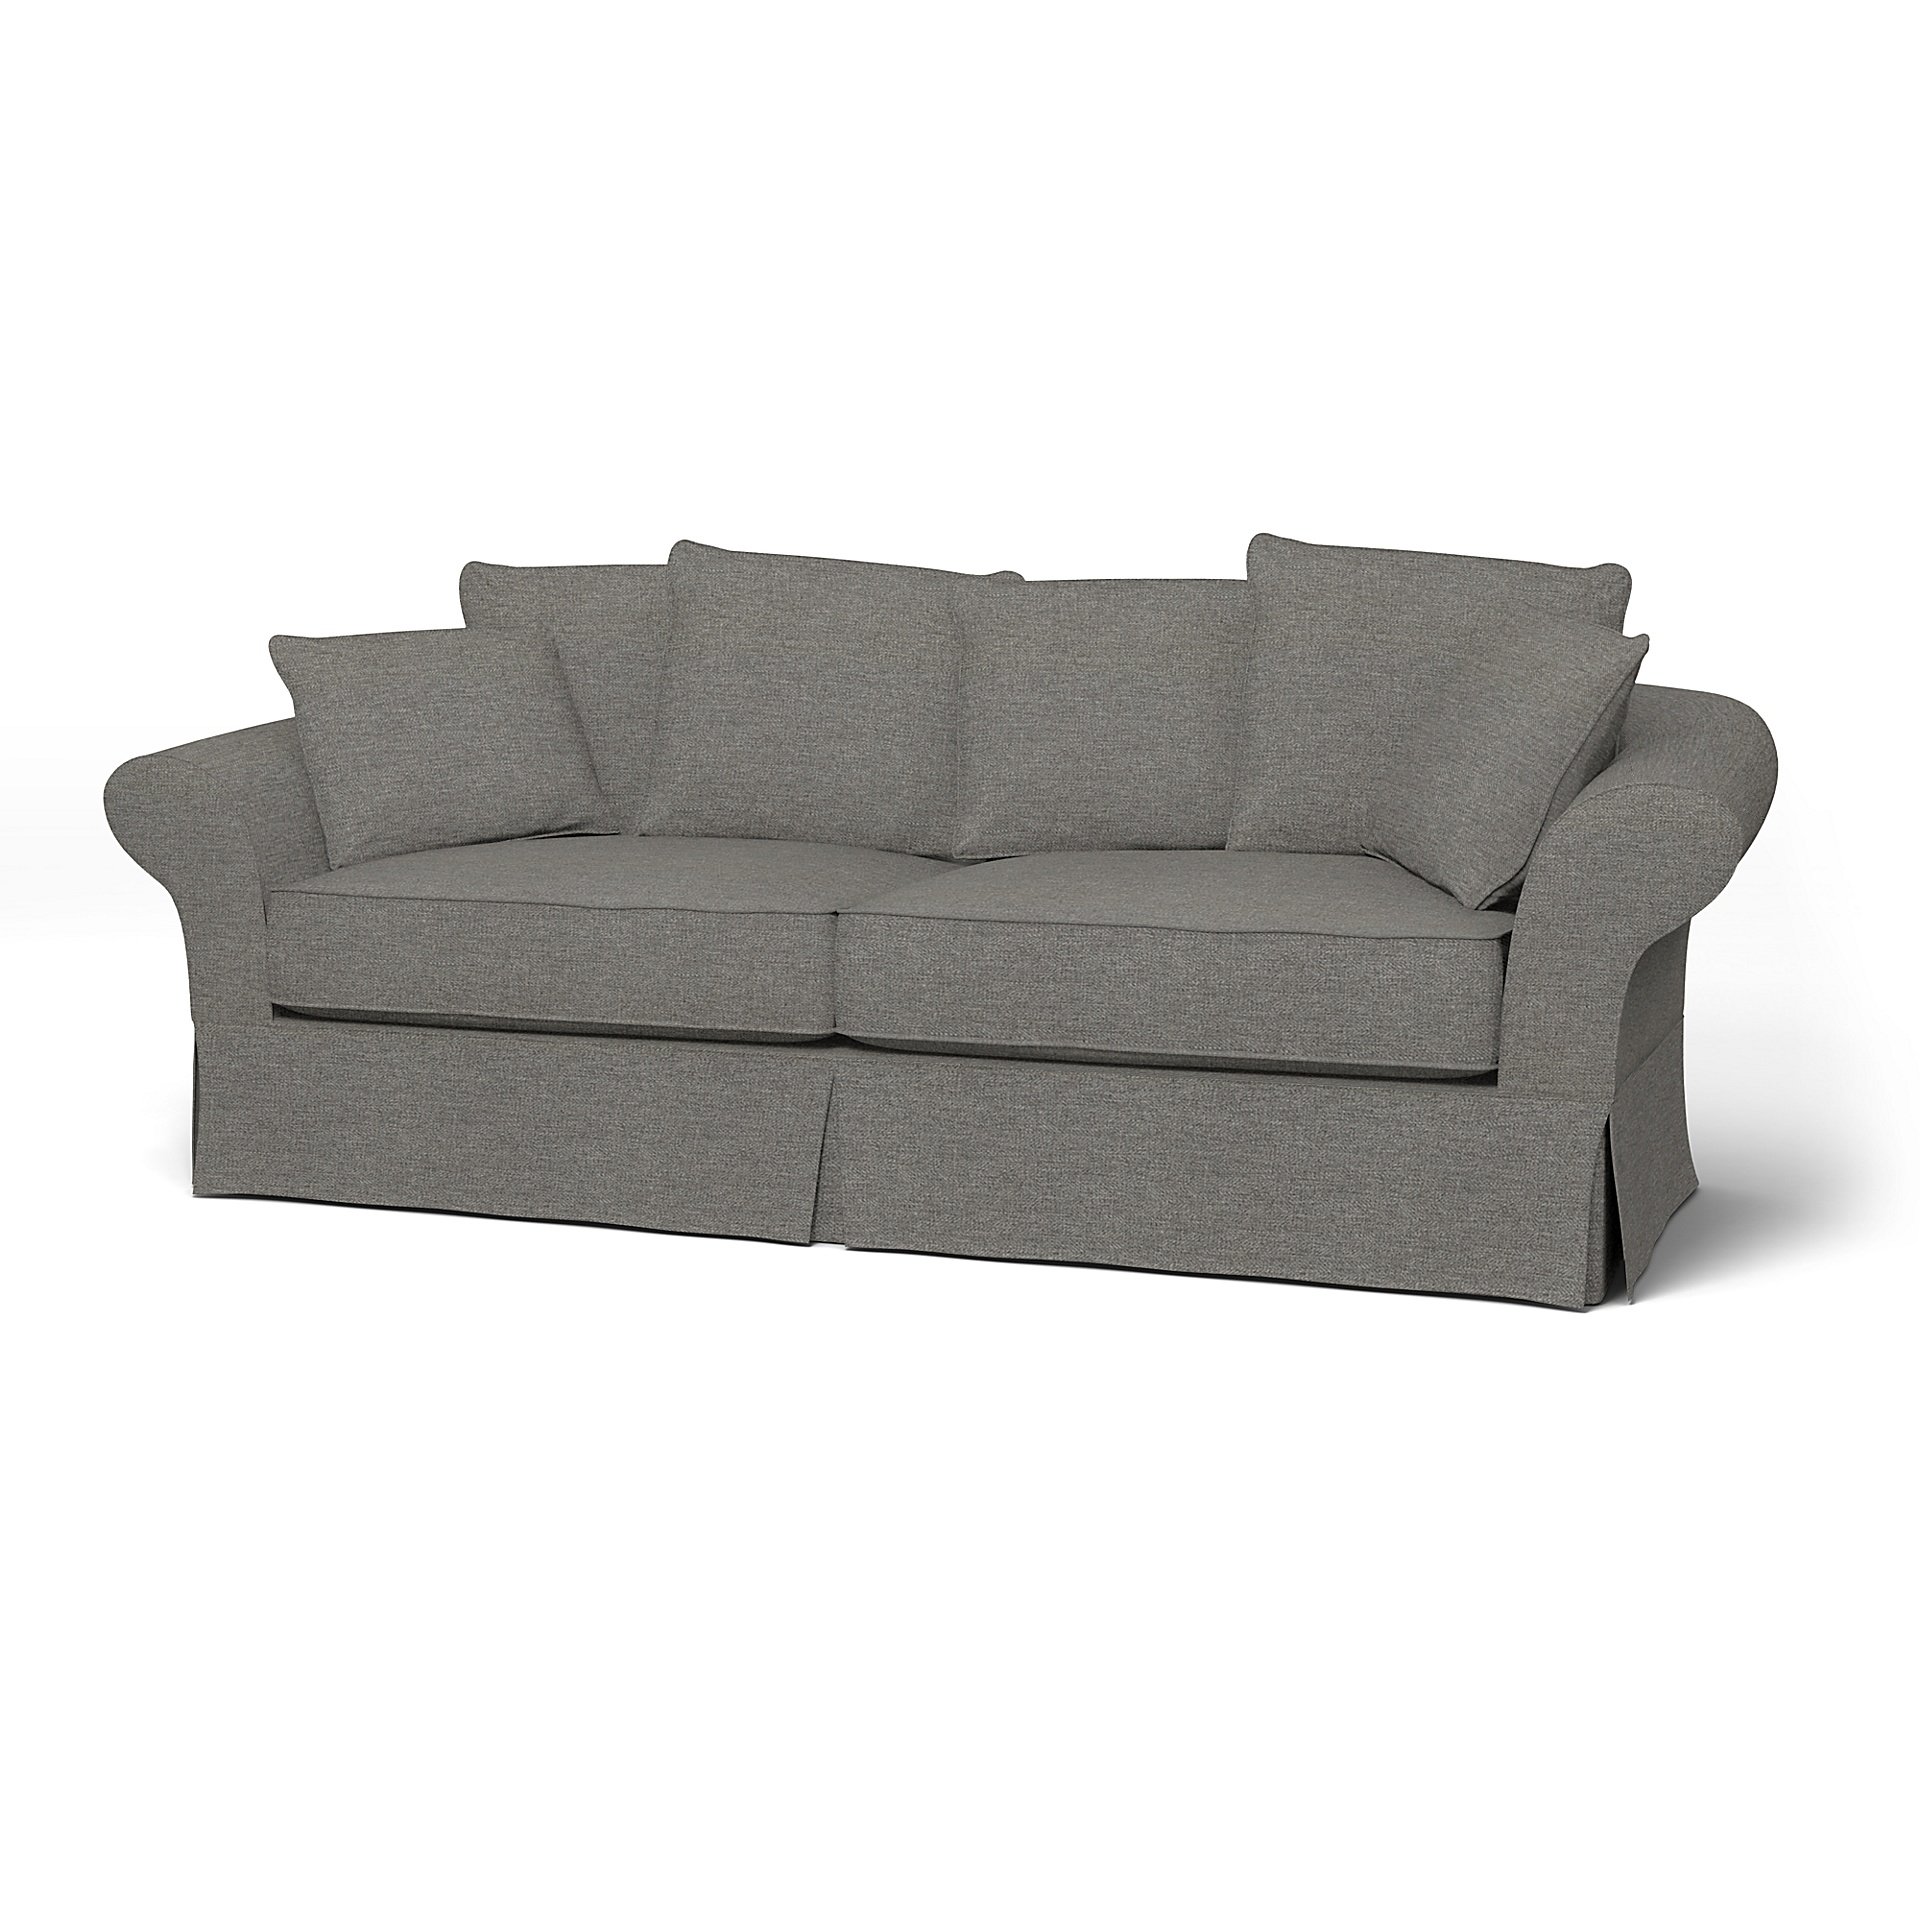 IKEA - Backamo 3 Seater Sofa Cover, Taupe, Boucle & Texture - Bemz